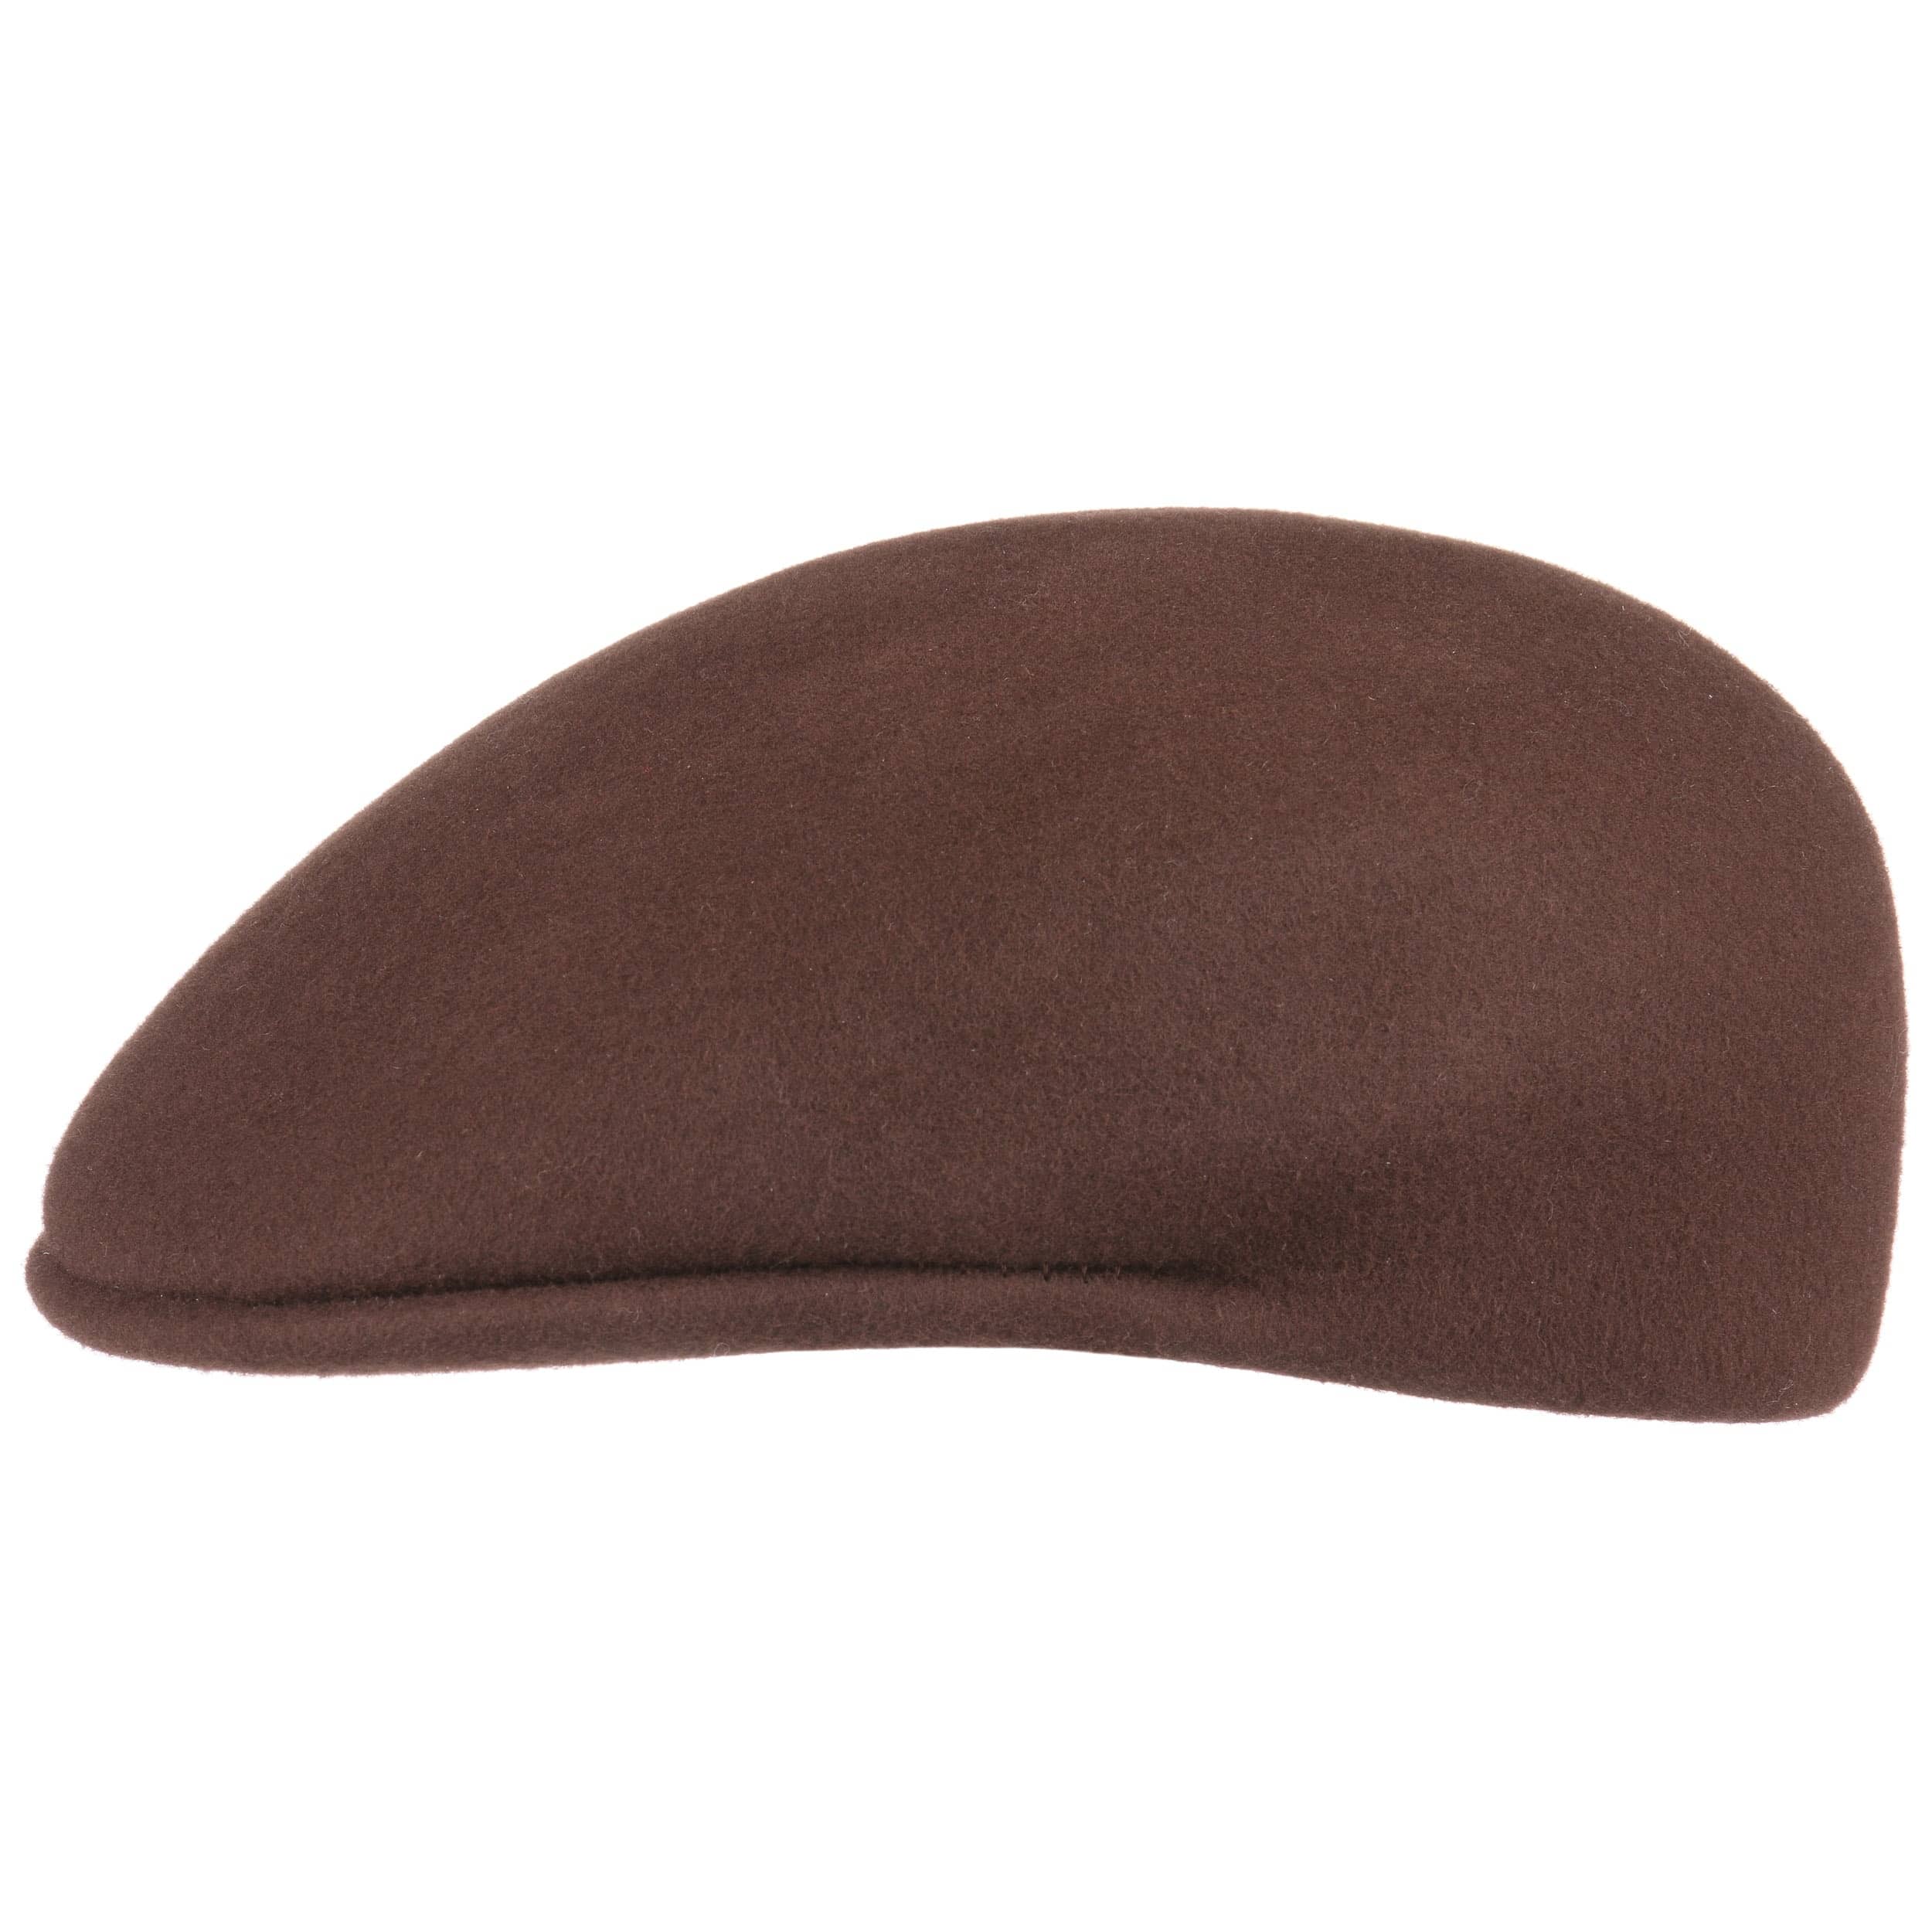 Felt Flat Cap by Lipodo, EUR 24,95 --> Hats, caps & beanies shop online ...